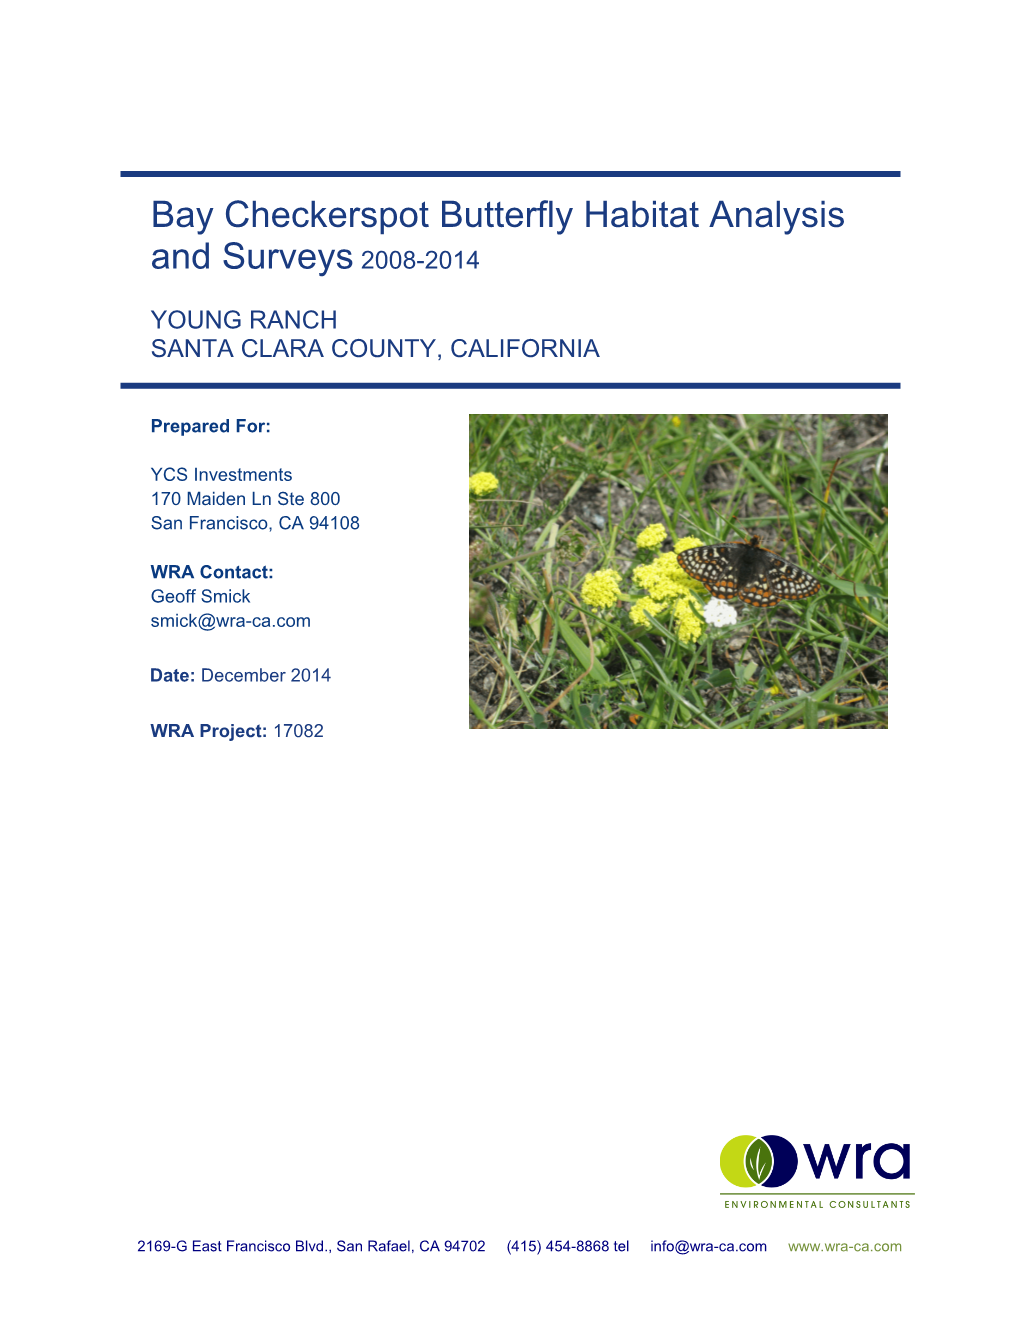 Bay Checkerspot Butterfly Habitat Analysis & Surveys